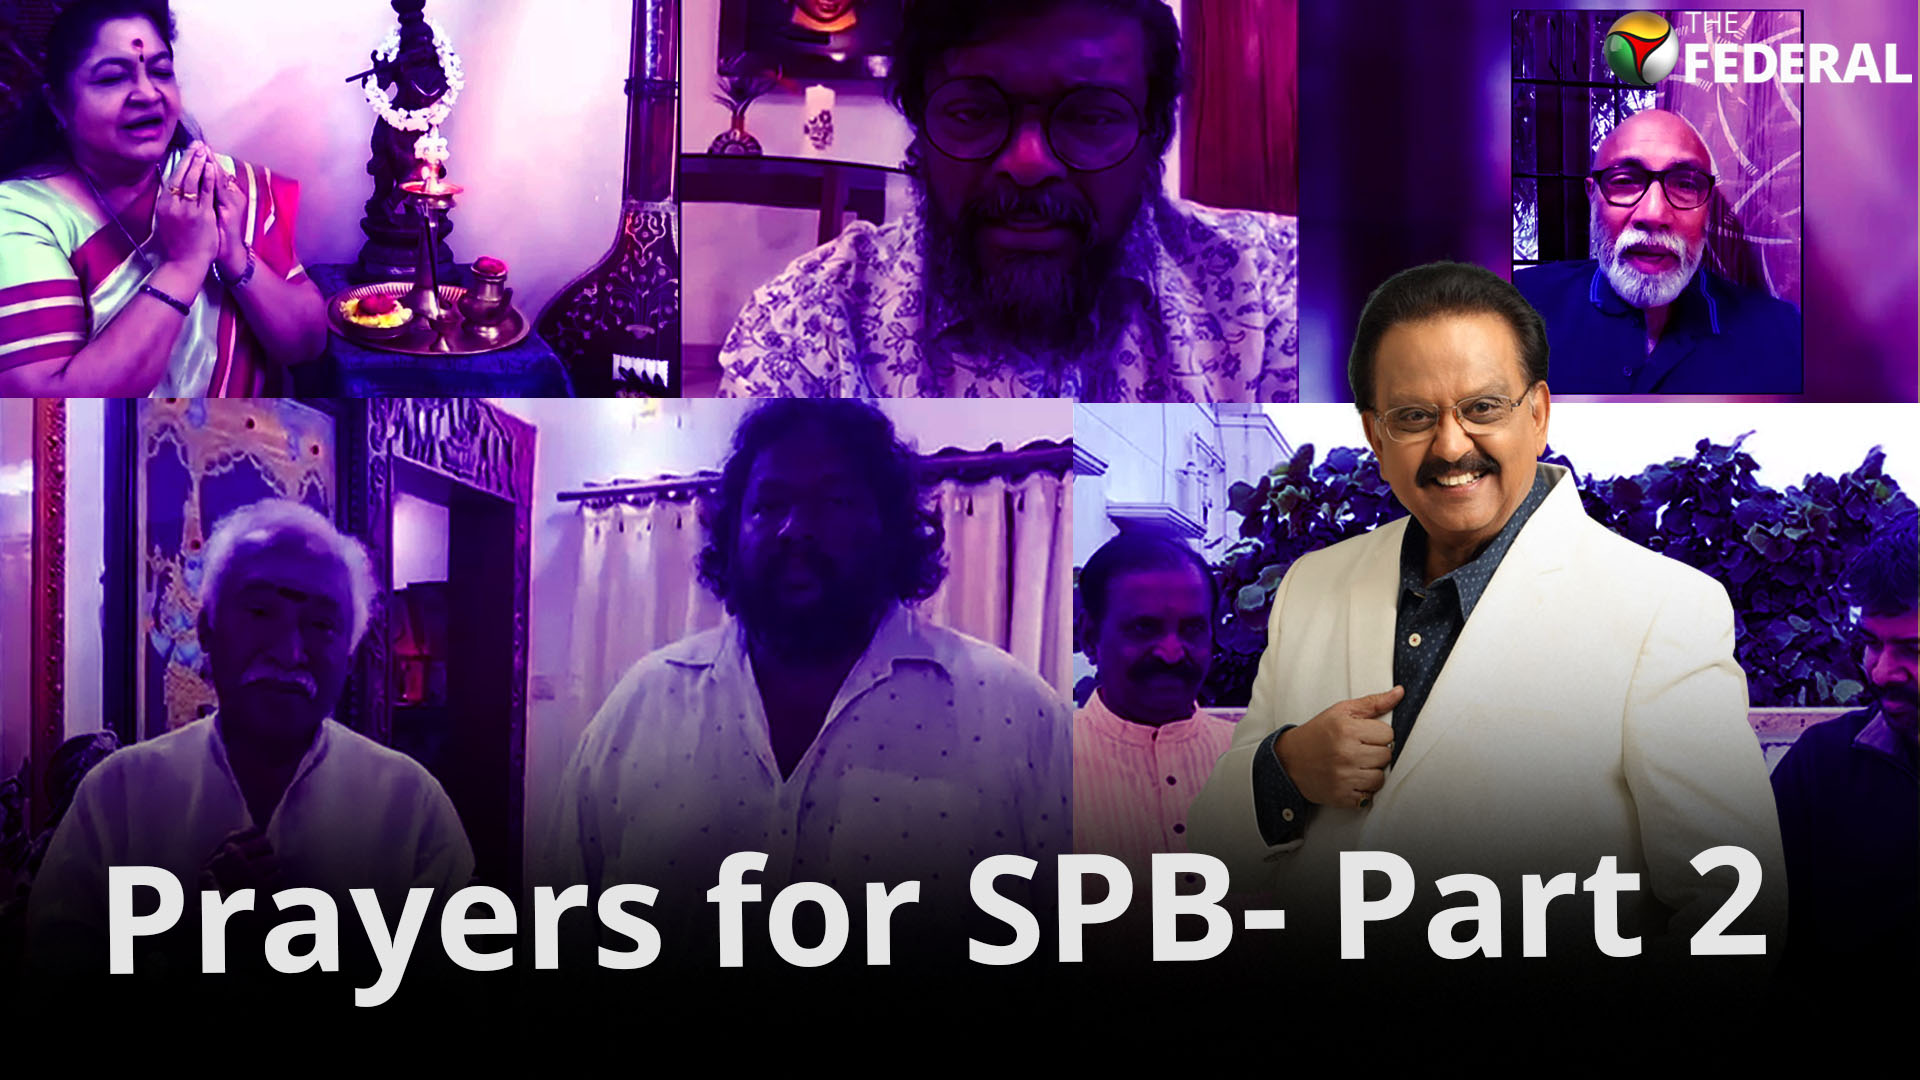 Film fraternity unites in prayers for SPB